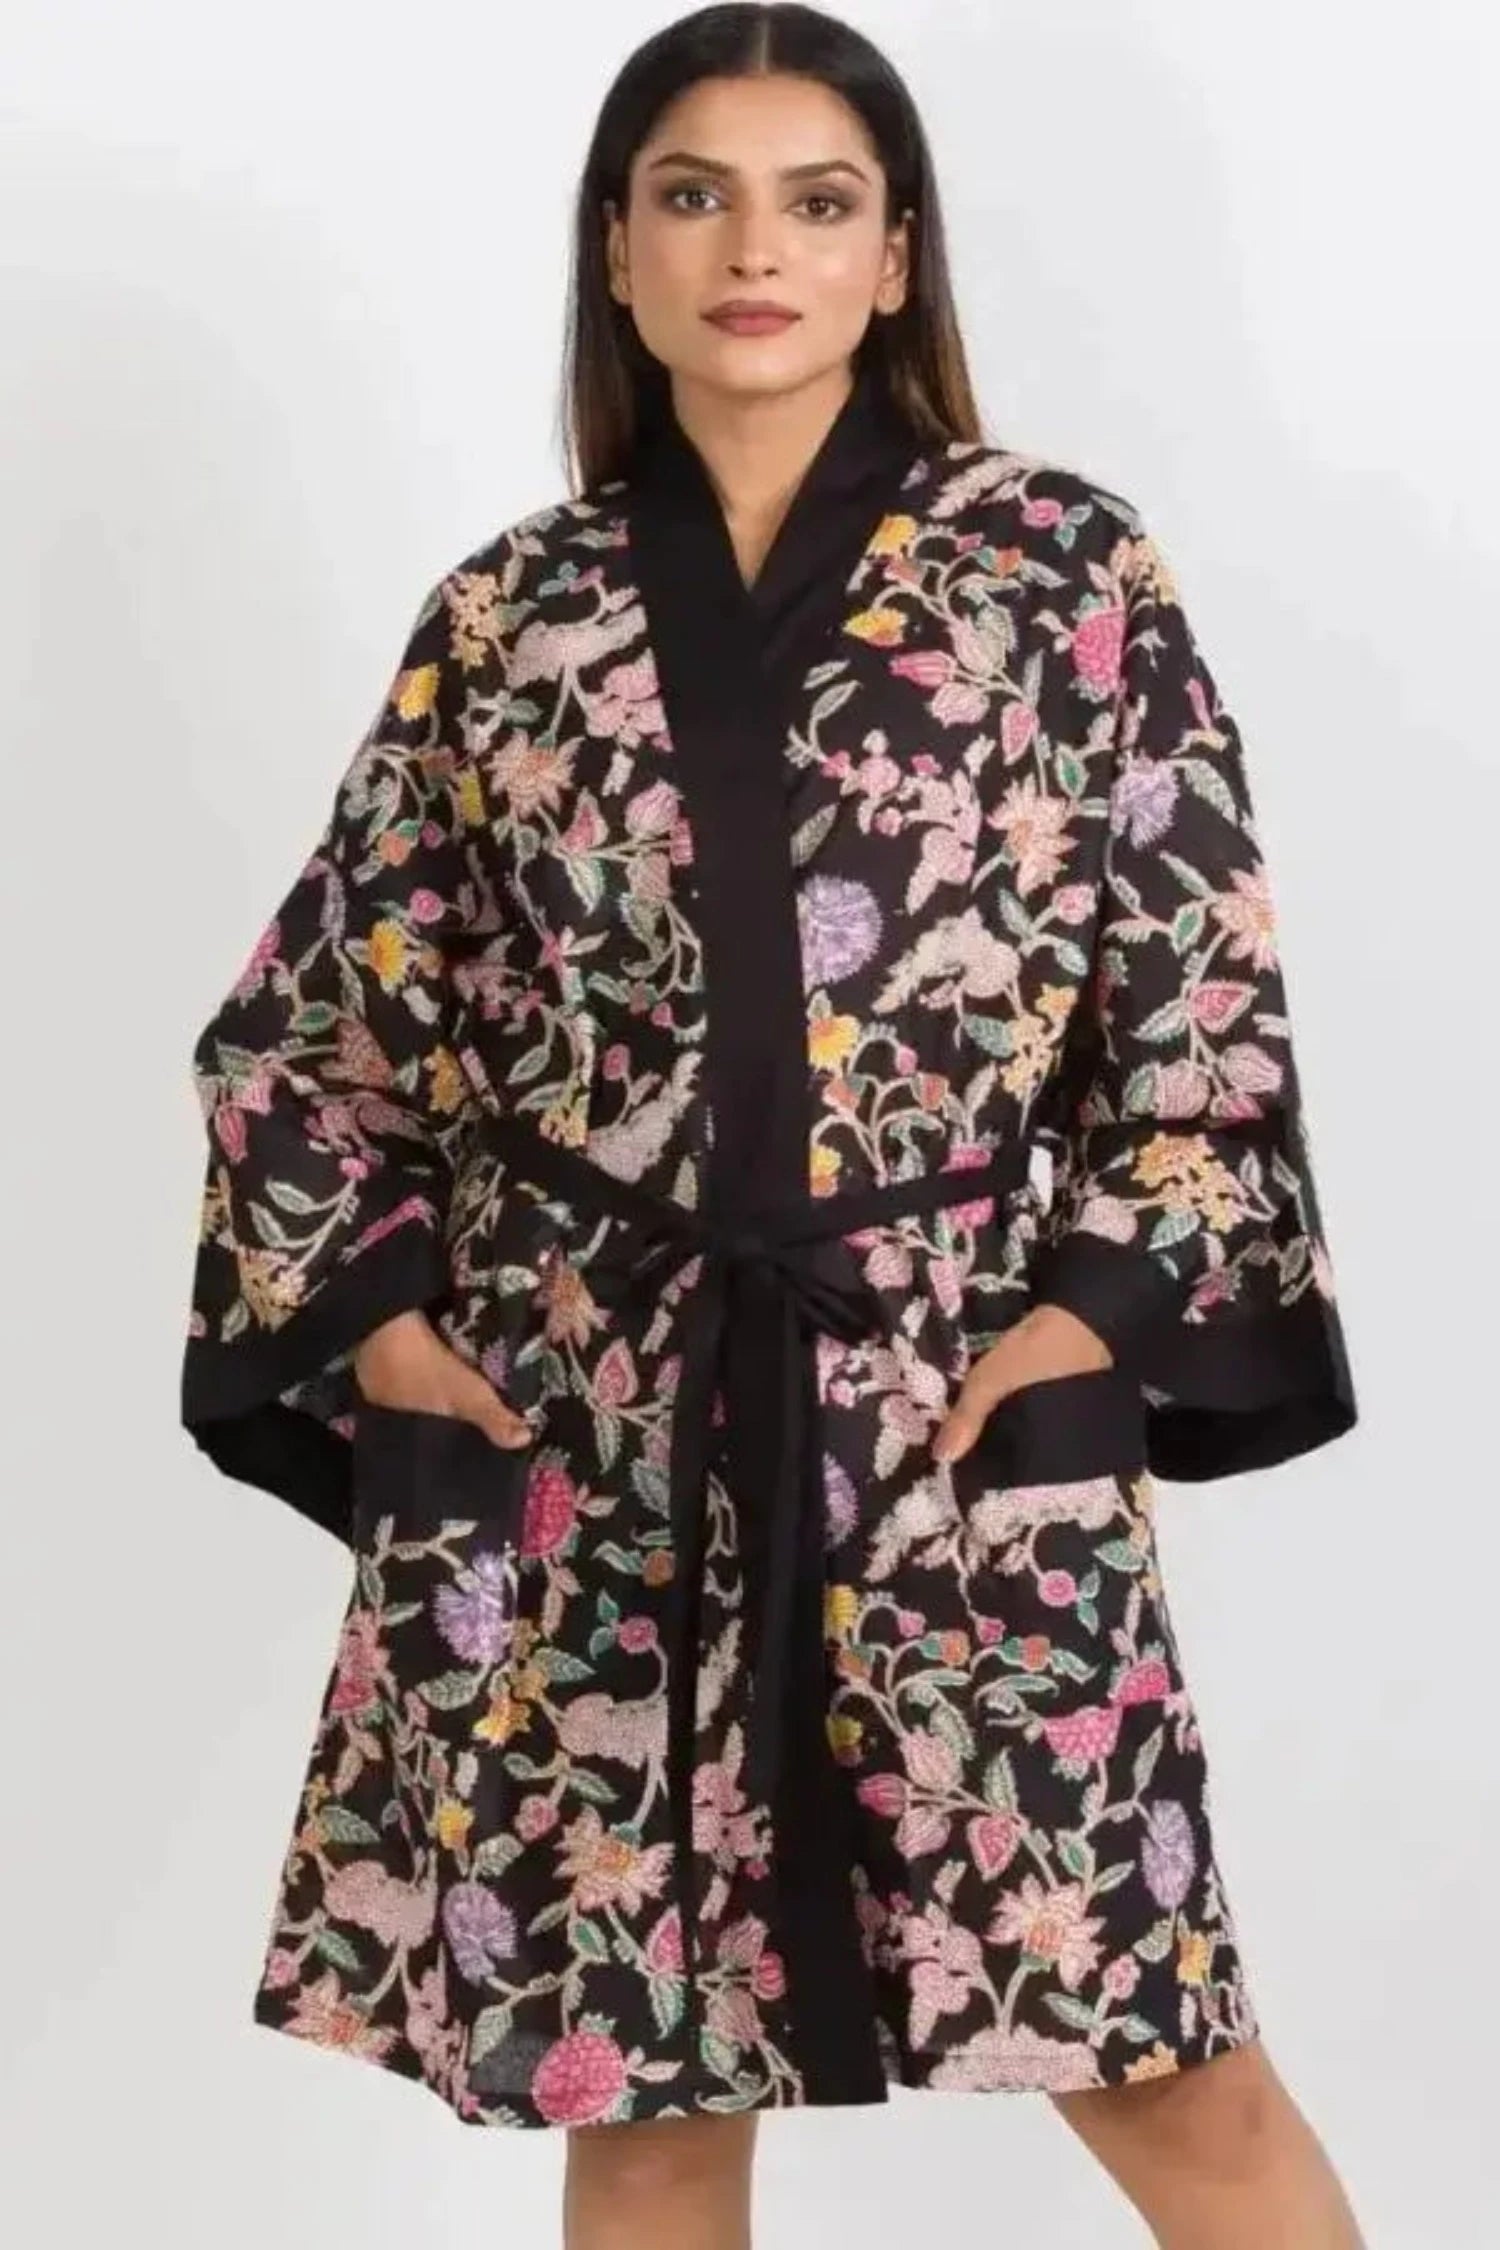 Anjuna Lilly floral-print robe coat - Purple